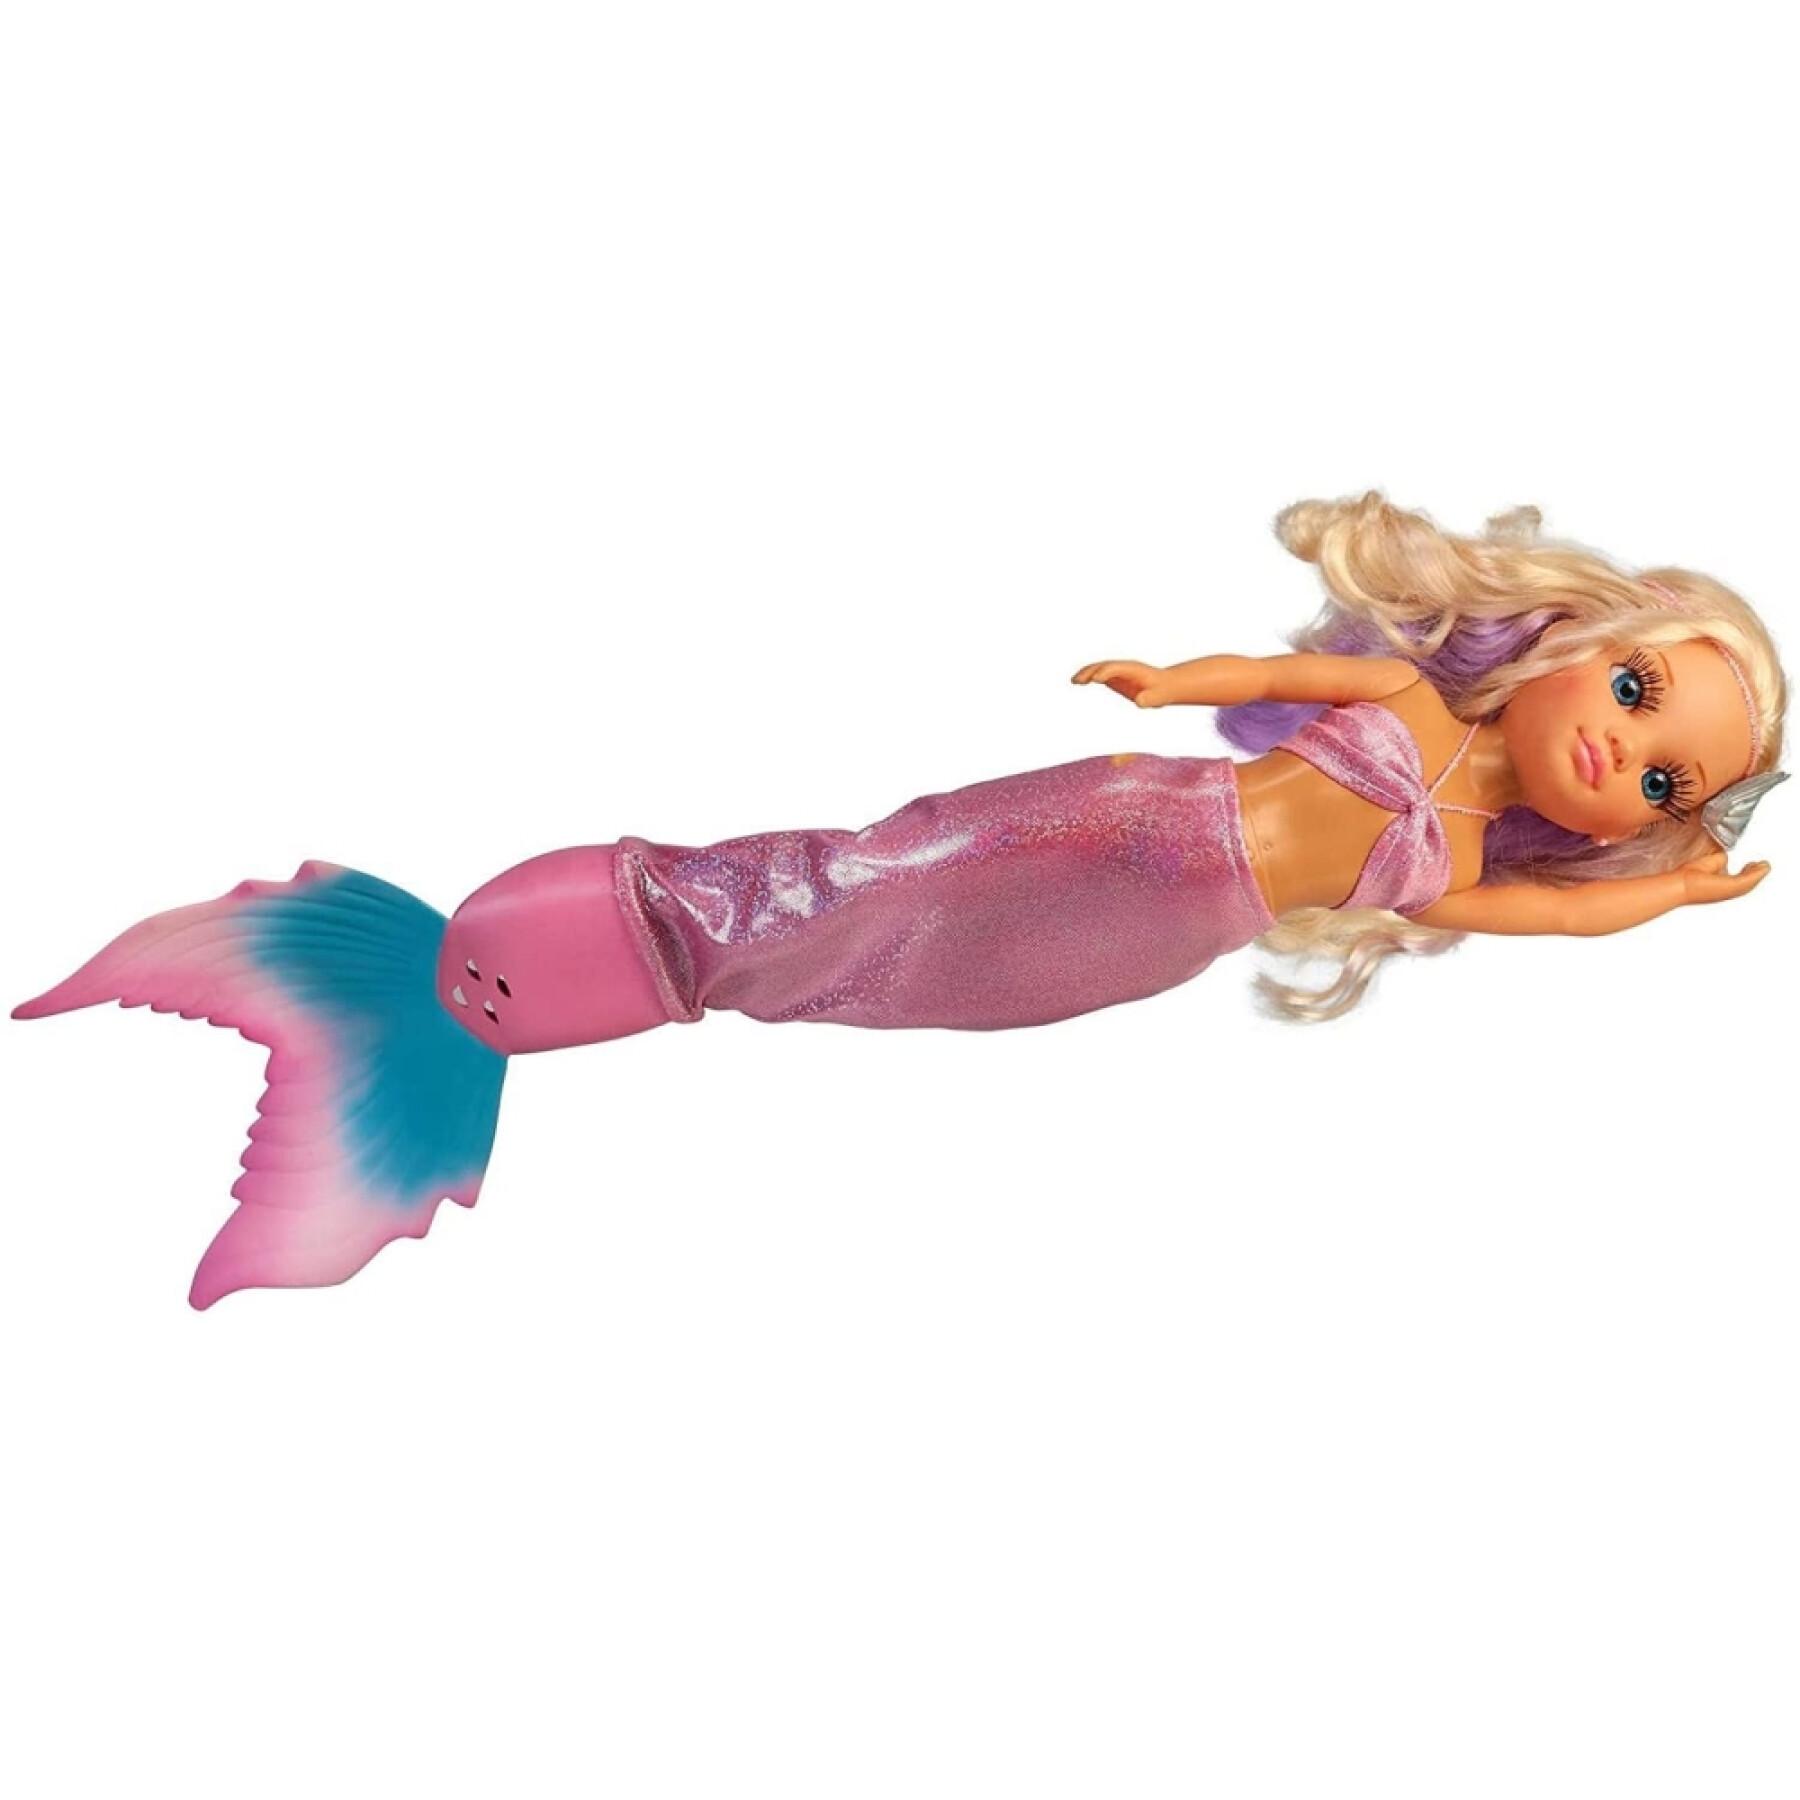 Muñeca escolar Famosa Mermaid